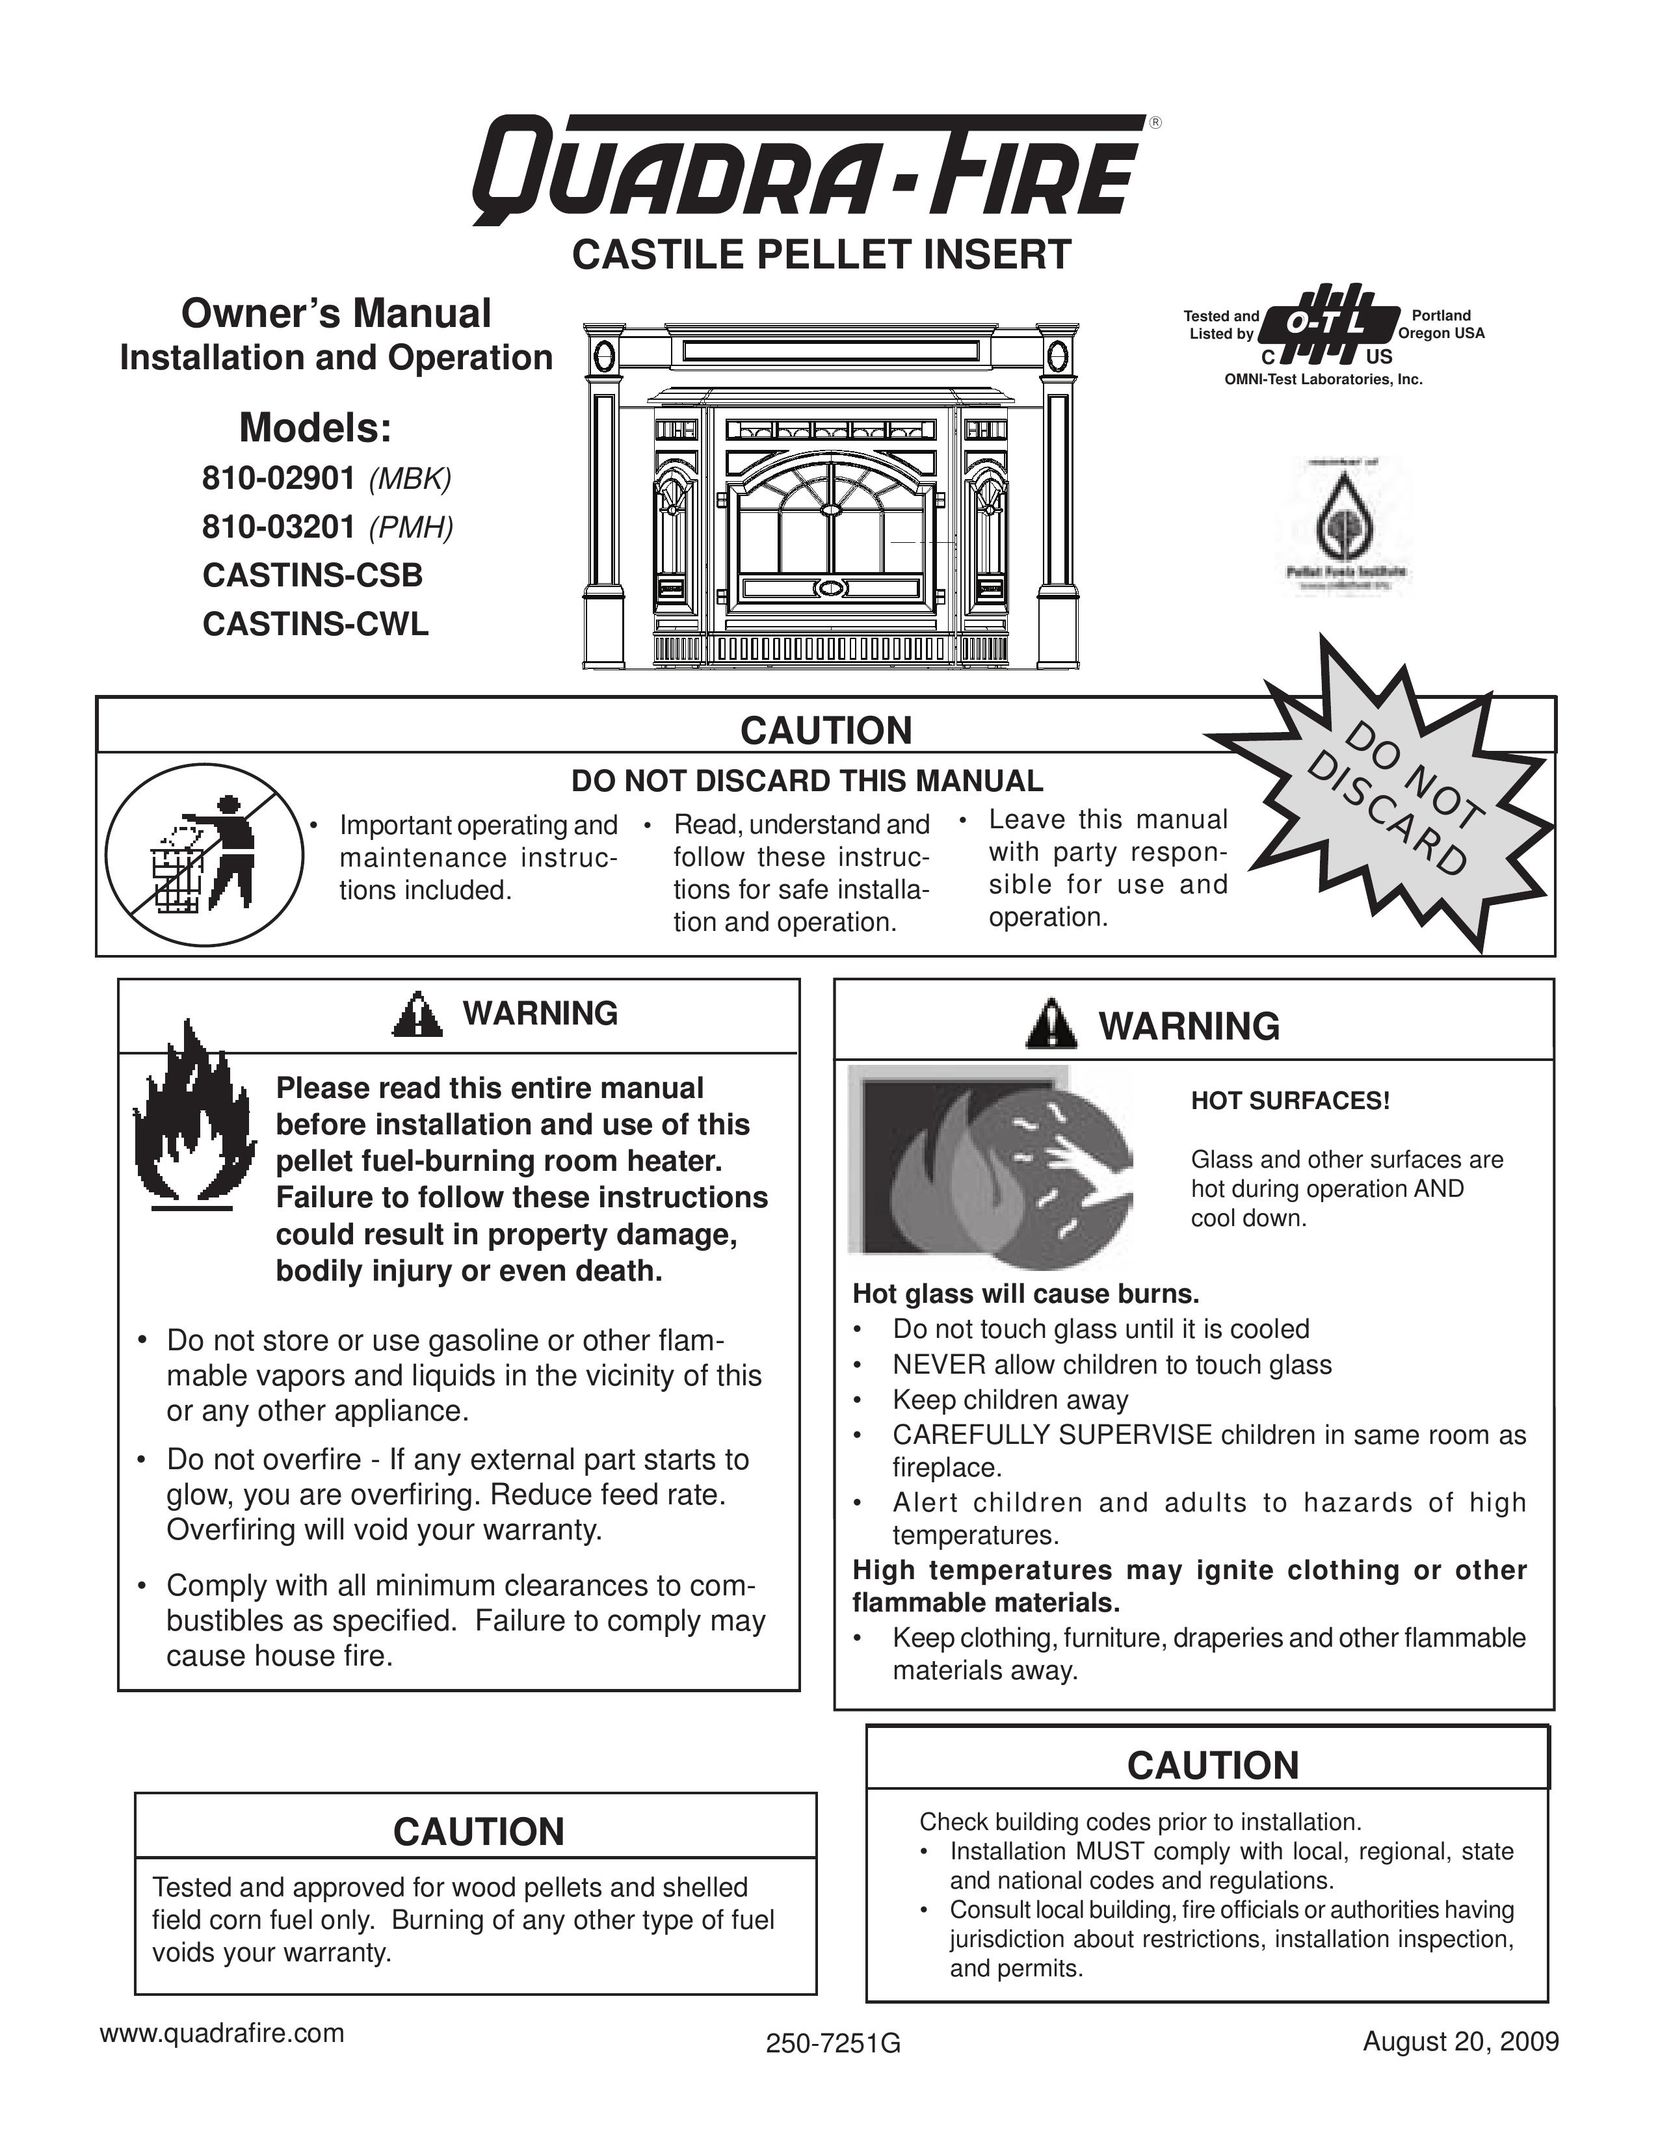 Quadra-Fire 810-03201 Indoor Fireplace User Manual